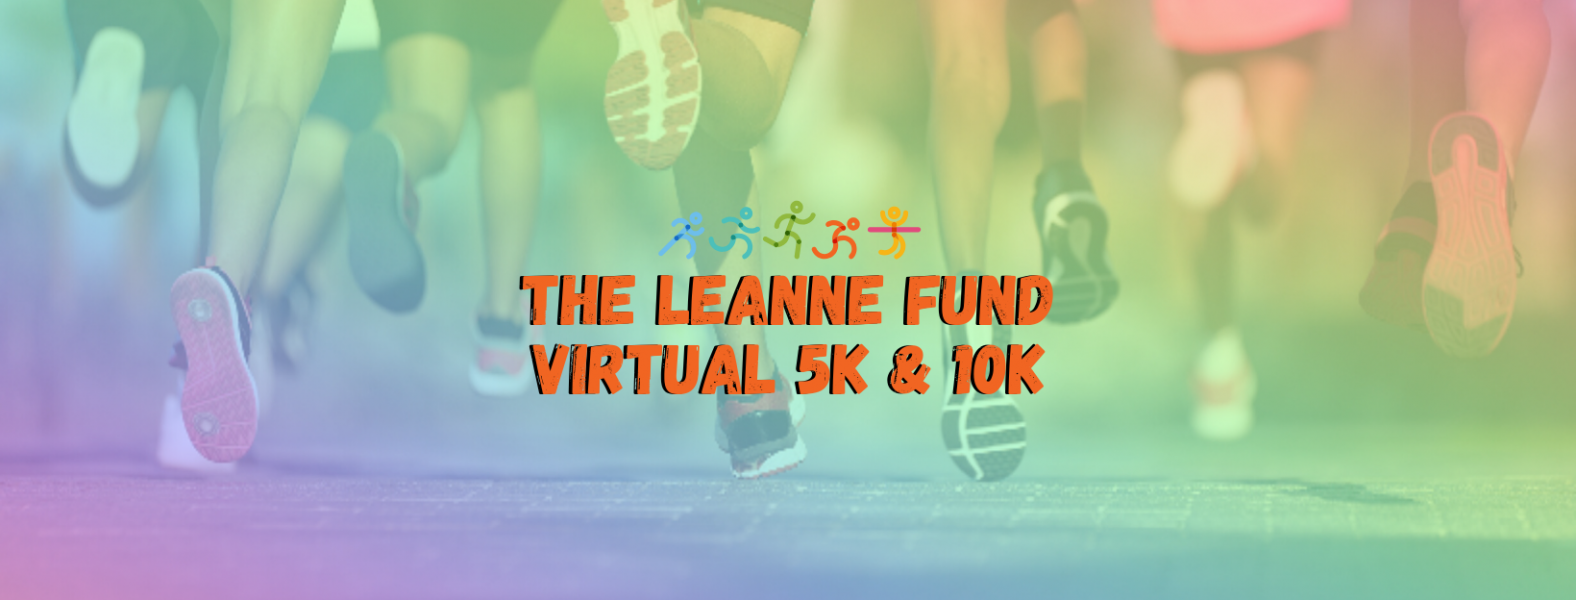 Leanne Fund Virtual 5K/10K 2021 carousel image 1